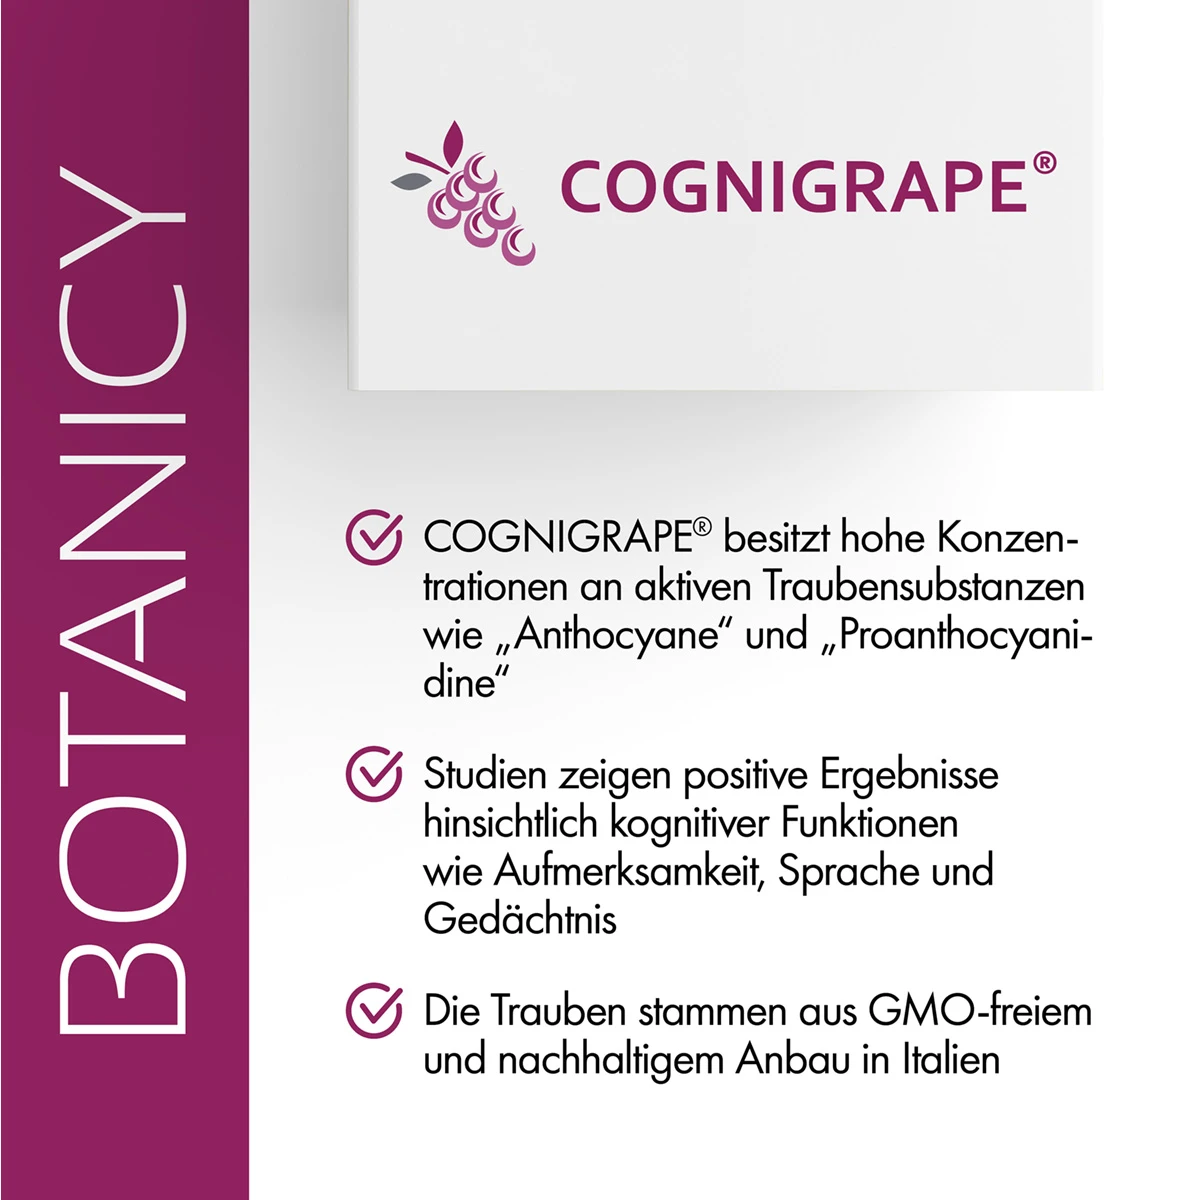 GINKGO Complex mit Cognigrape